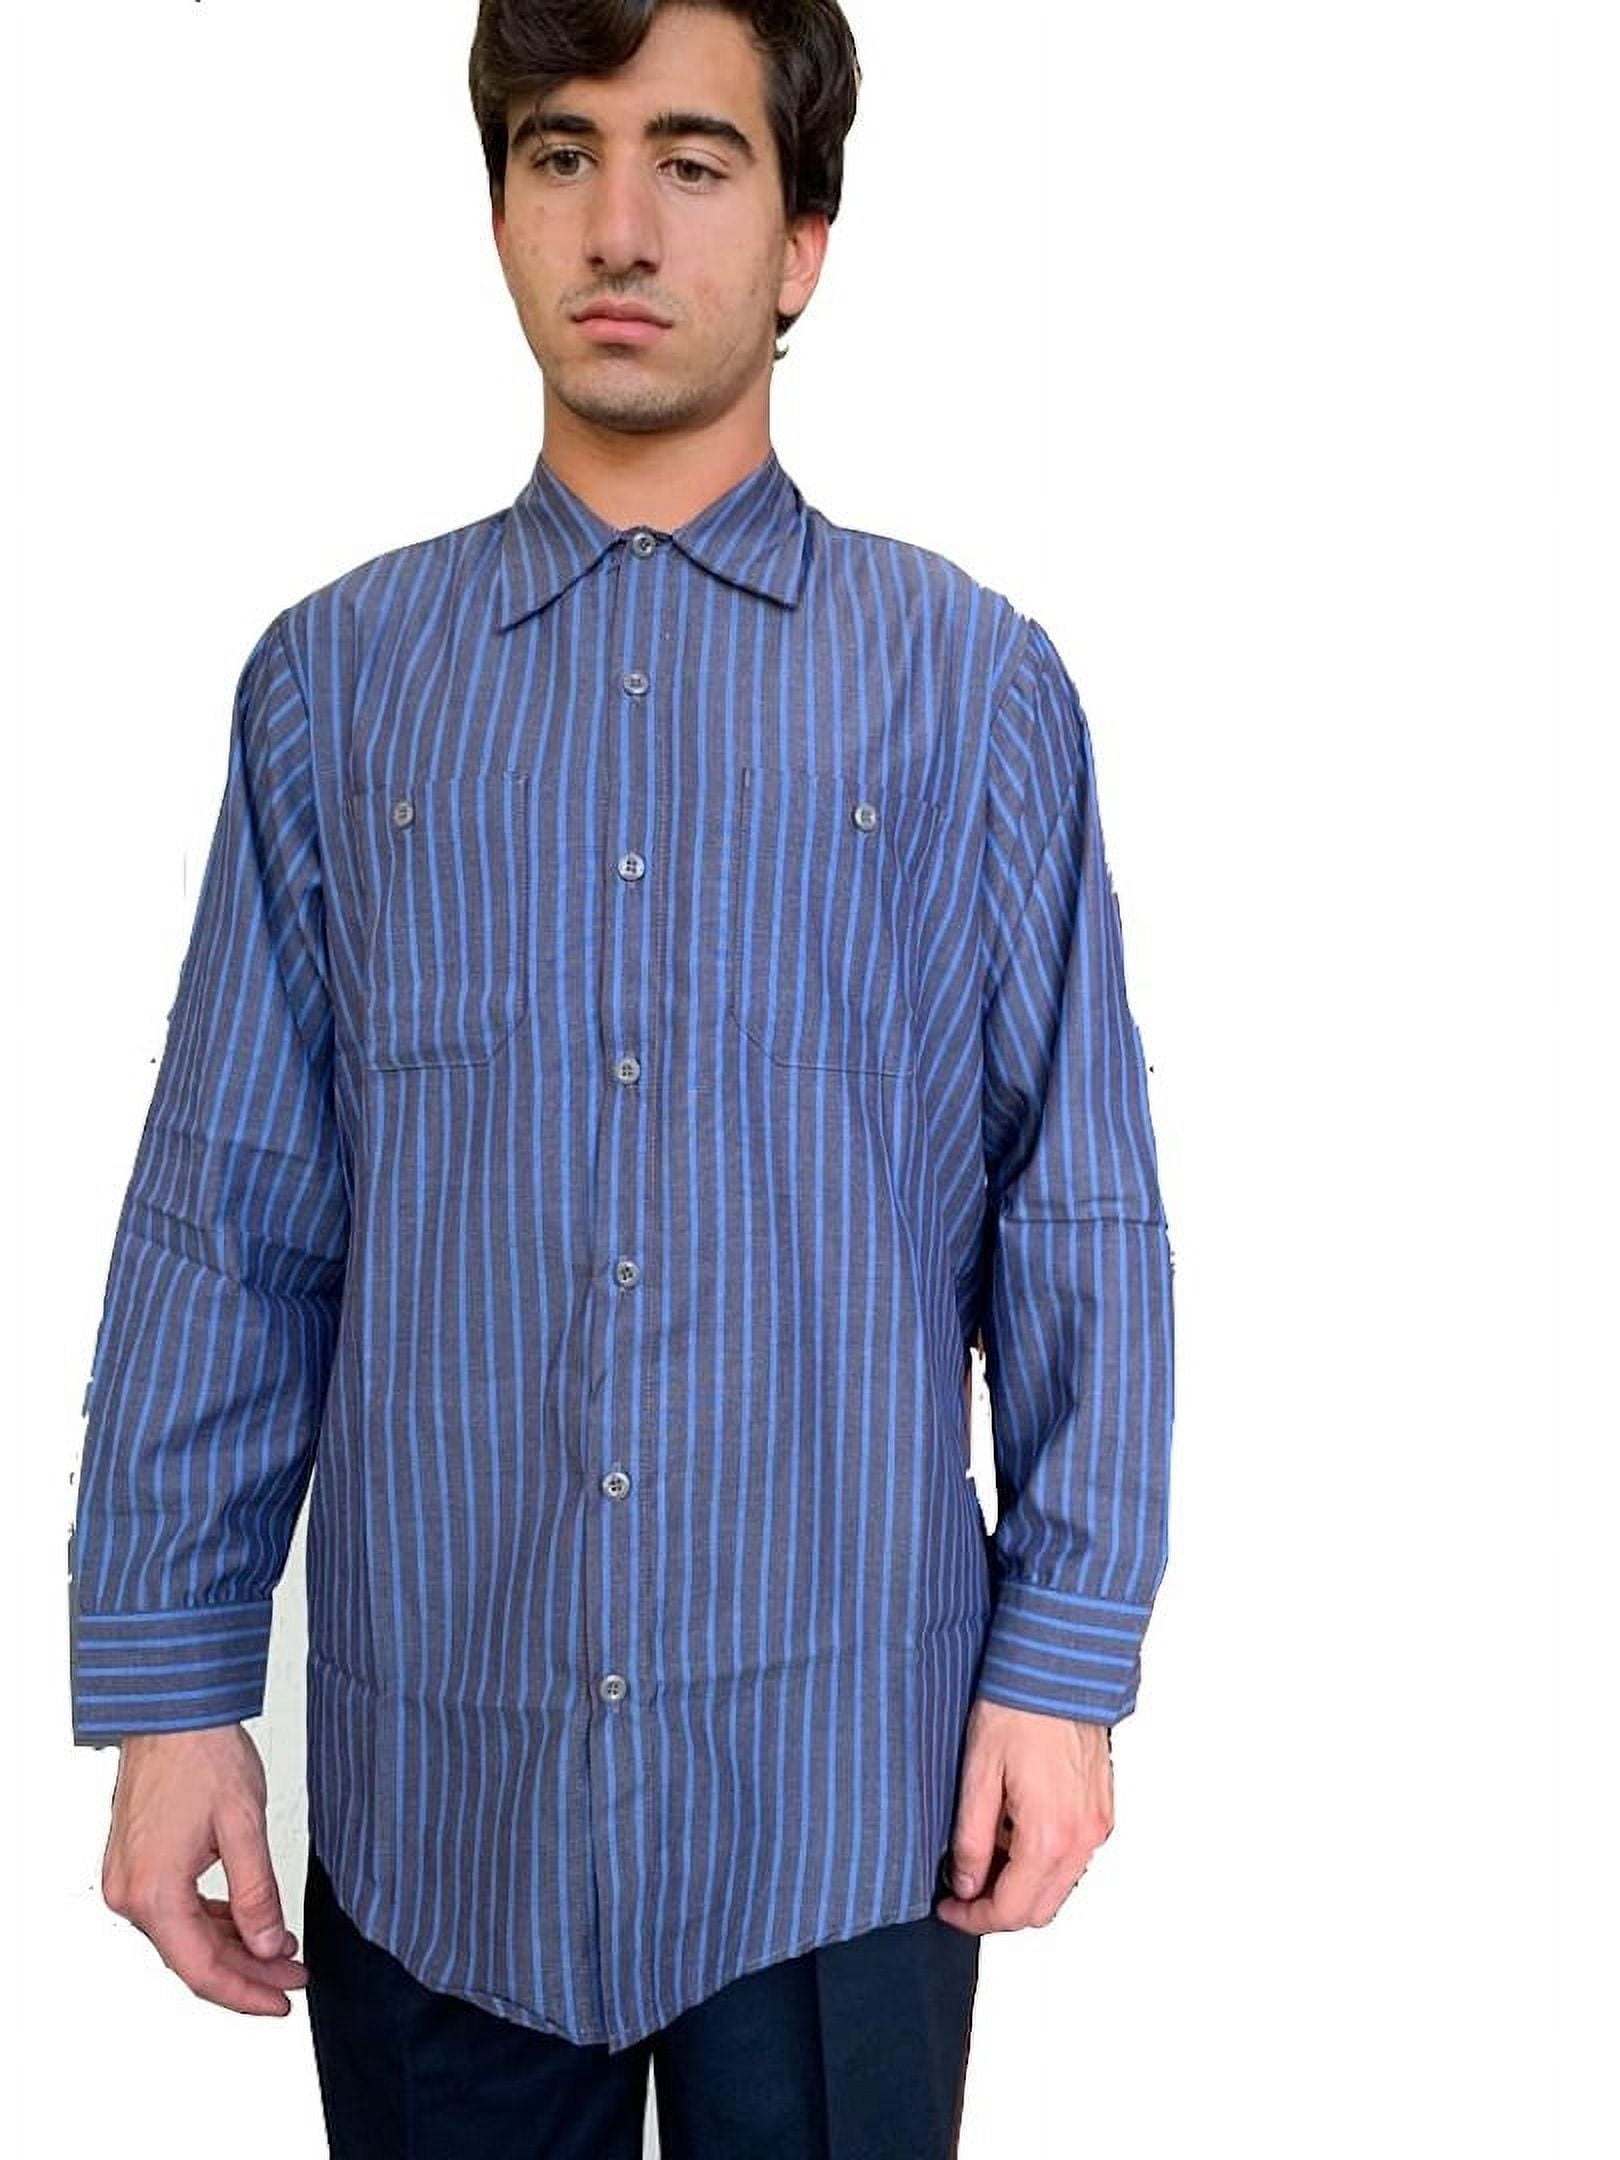 Pdbokew Men's Sun Protection Fishing Shirts Long Sleeve Travel Work Shirts  for Men UPF50+ Button Down Shirts with Zipper Pockets Mist Blue XL